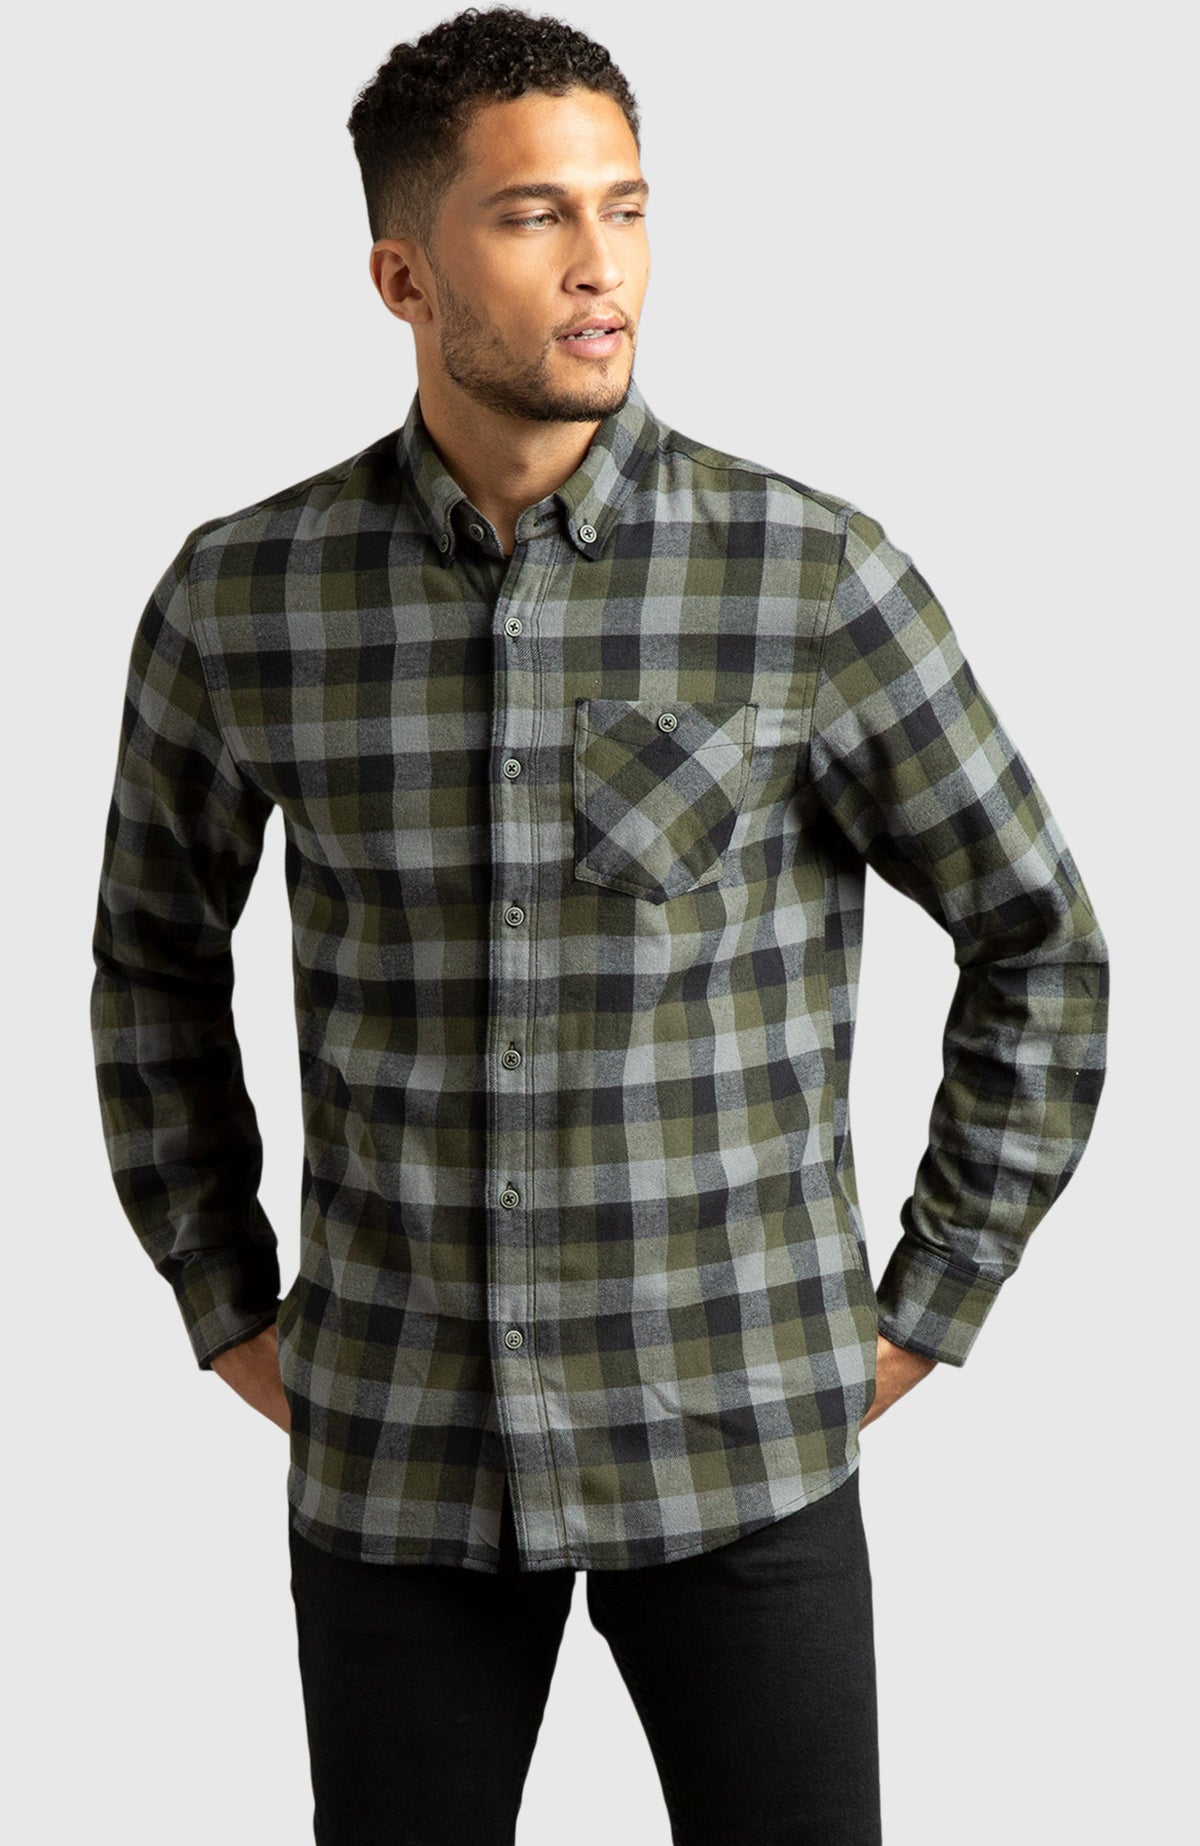 Green & Black Plaid Flannel Shirt for Men - Front